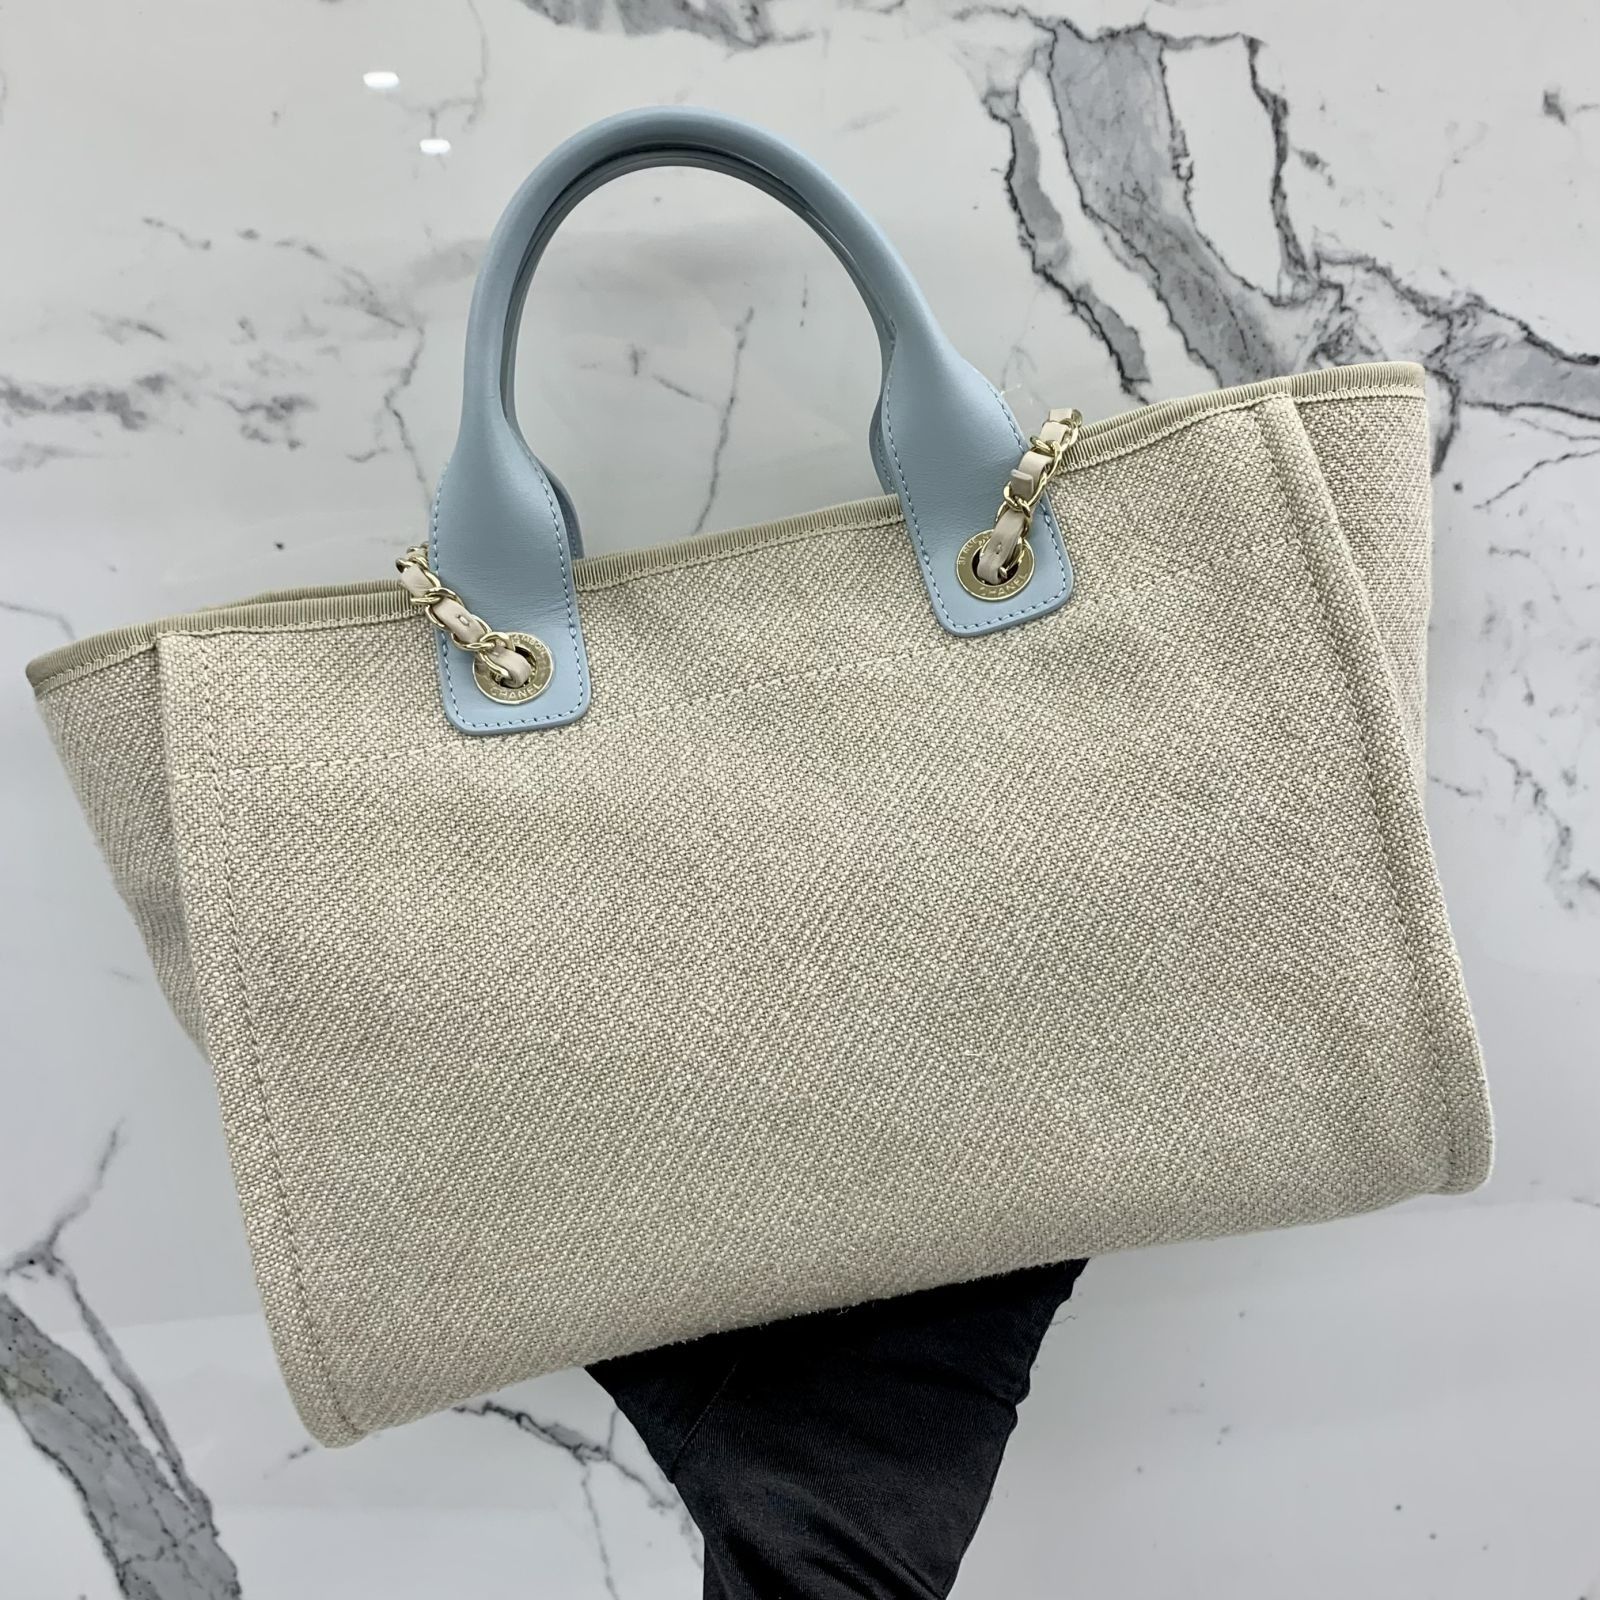 Chanel Small Shopping Bag Silver Hardware Cream For Women Womens Handbags  Shoulder Bags 15.2In39cm As3257 - Buzzbify